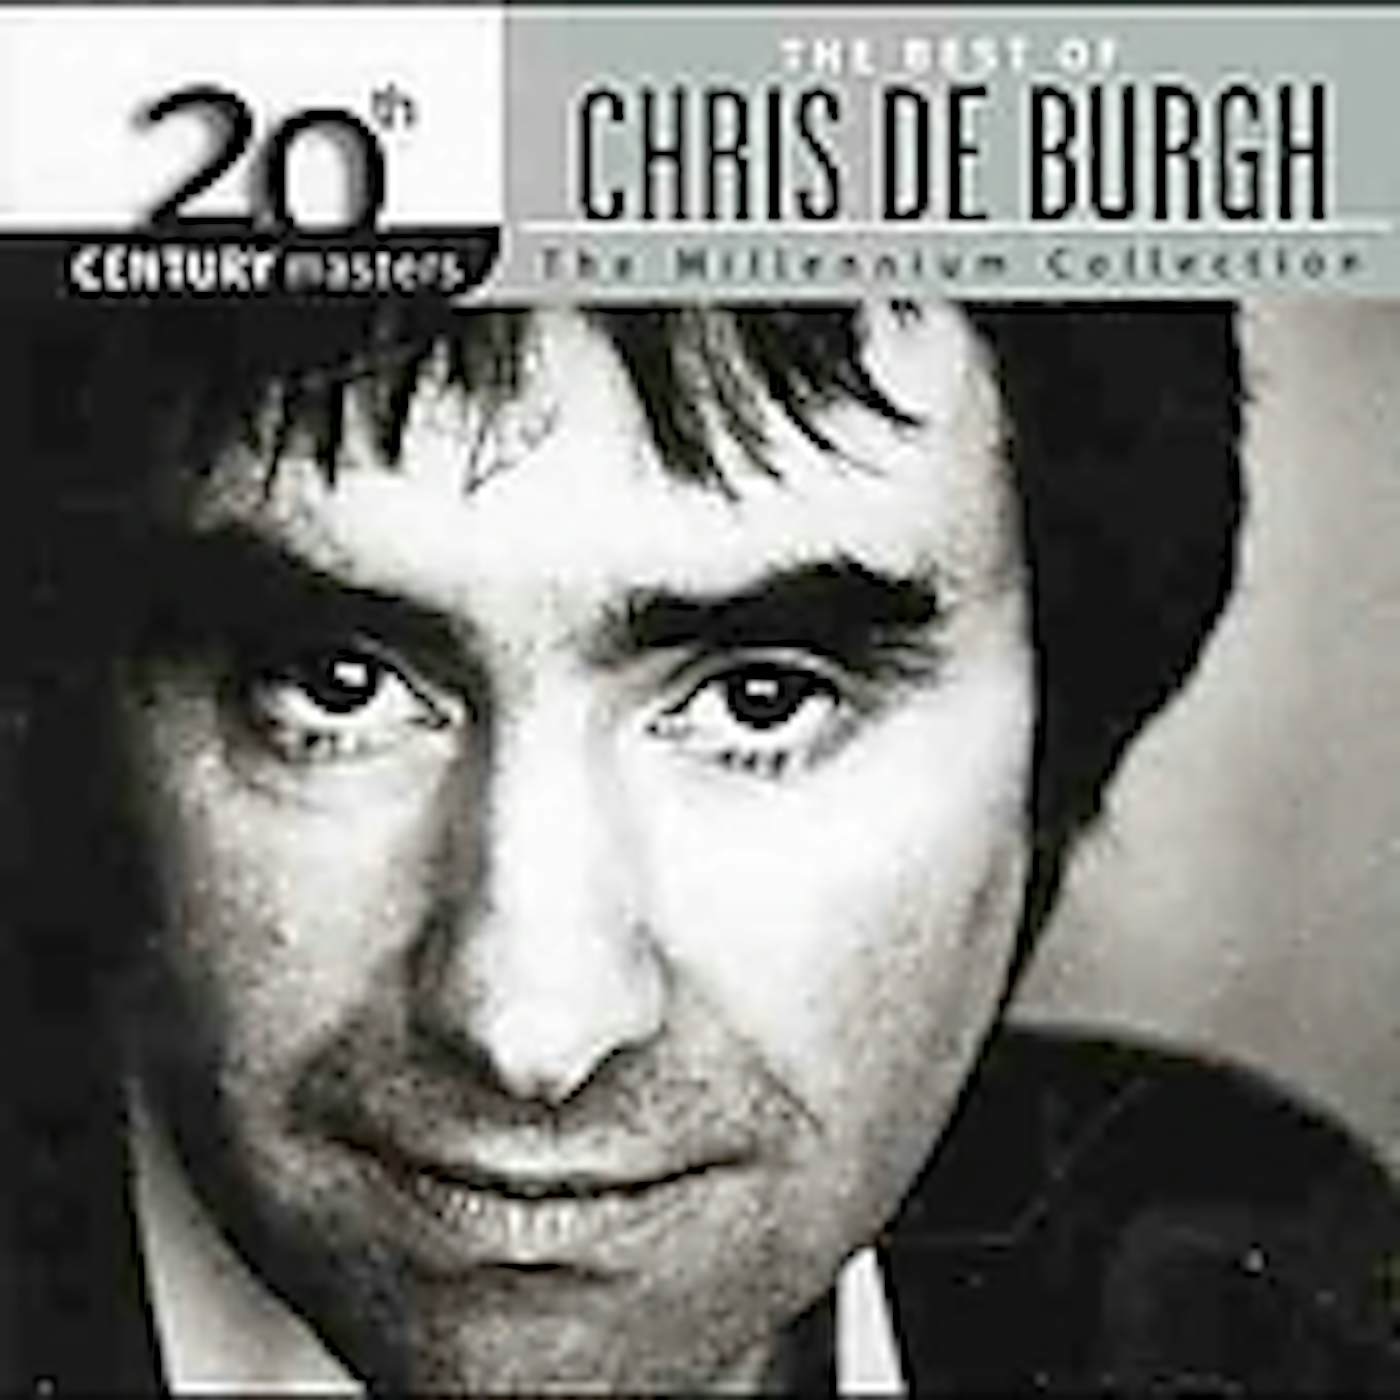 Chris de Burgh 20TH CENTURY MASTERS CD